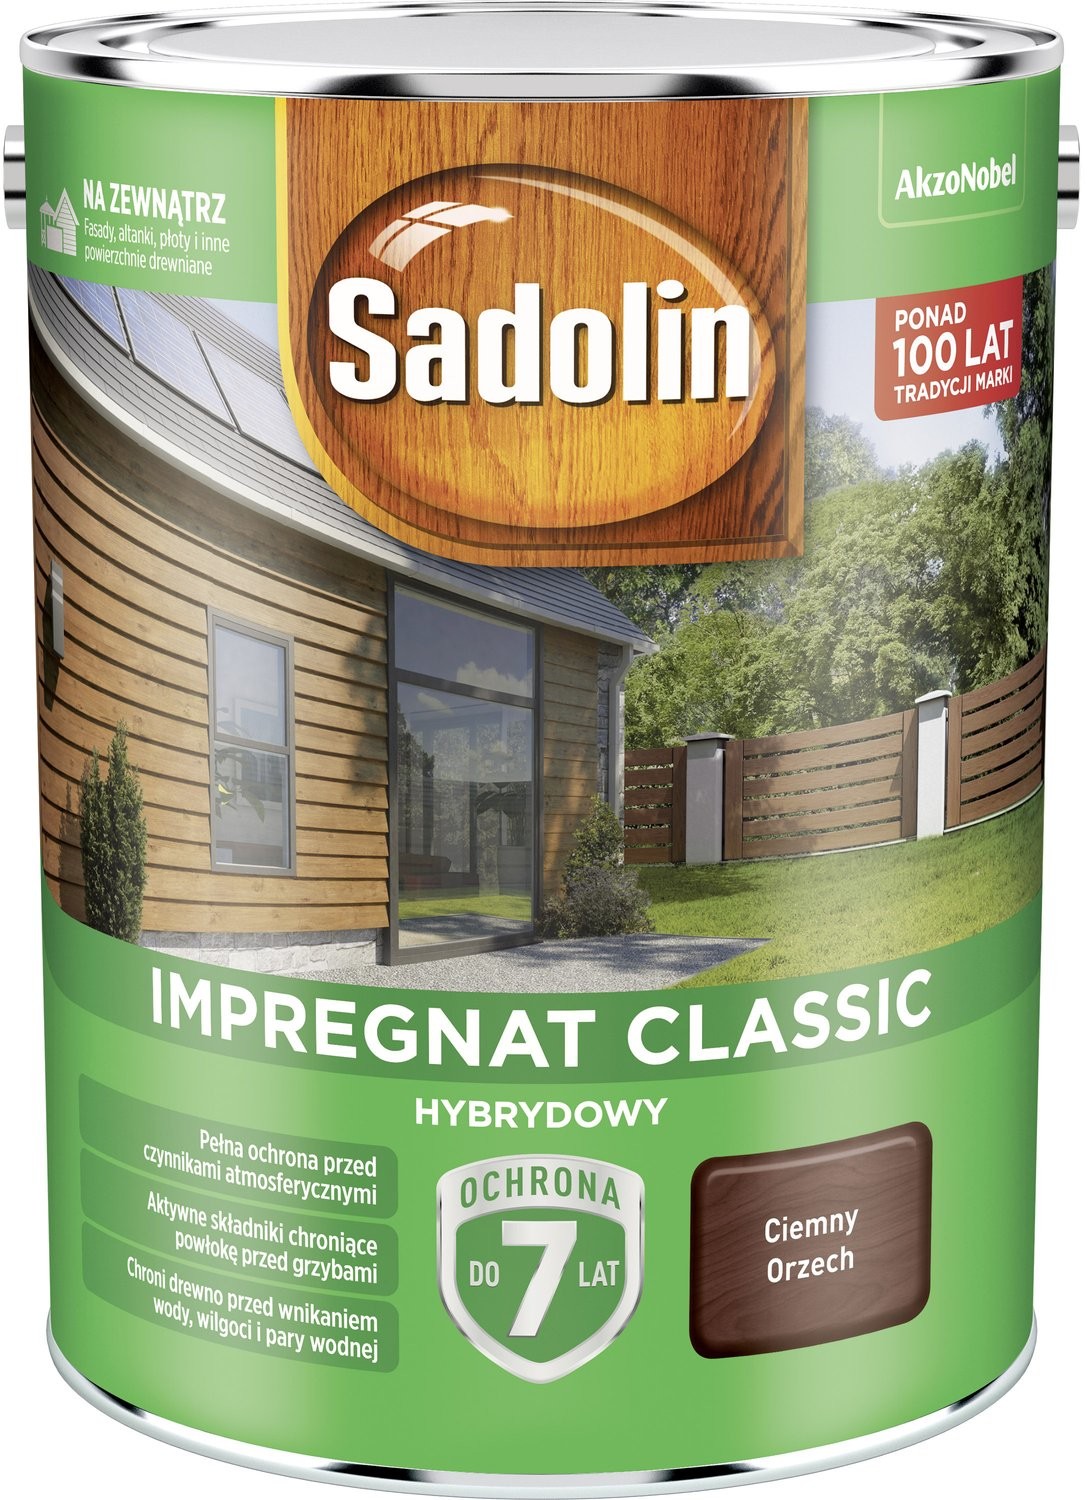 Sadolin Impregnat Classic ciemny orzech 4,5 l